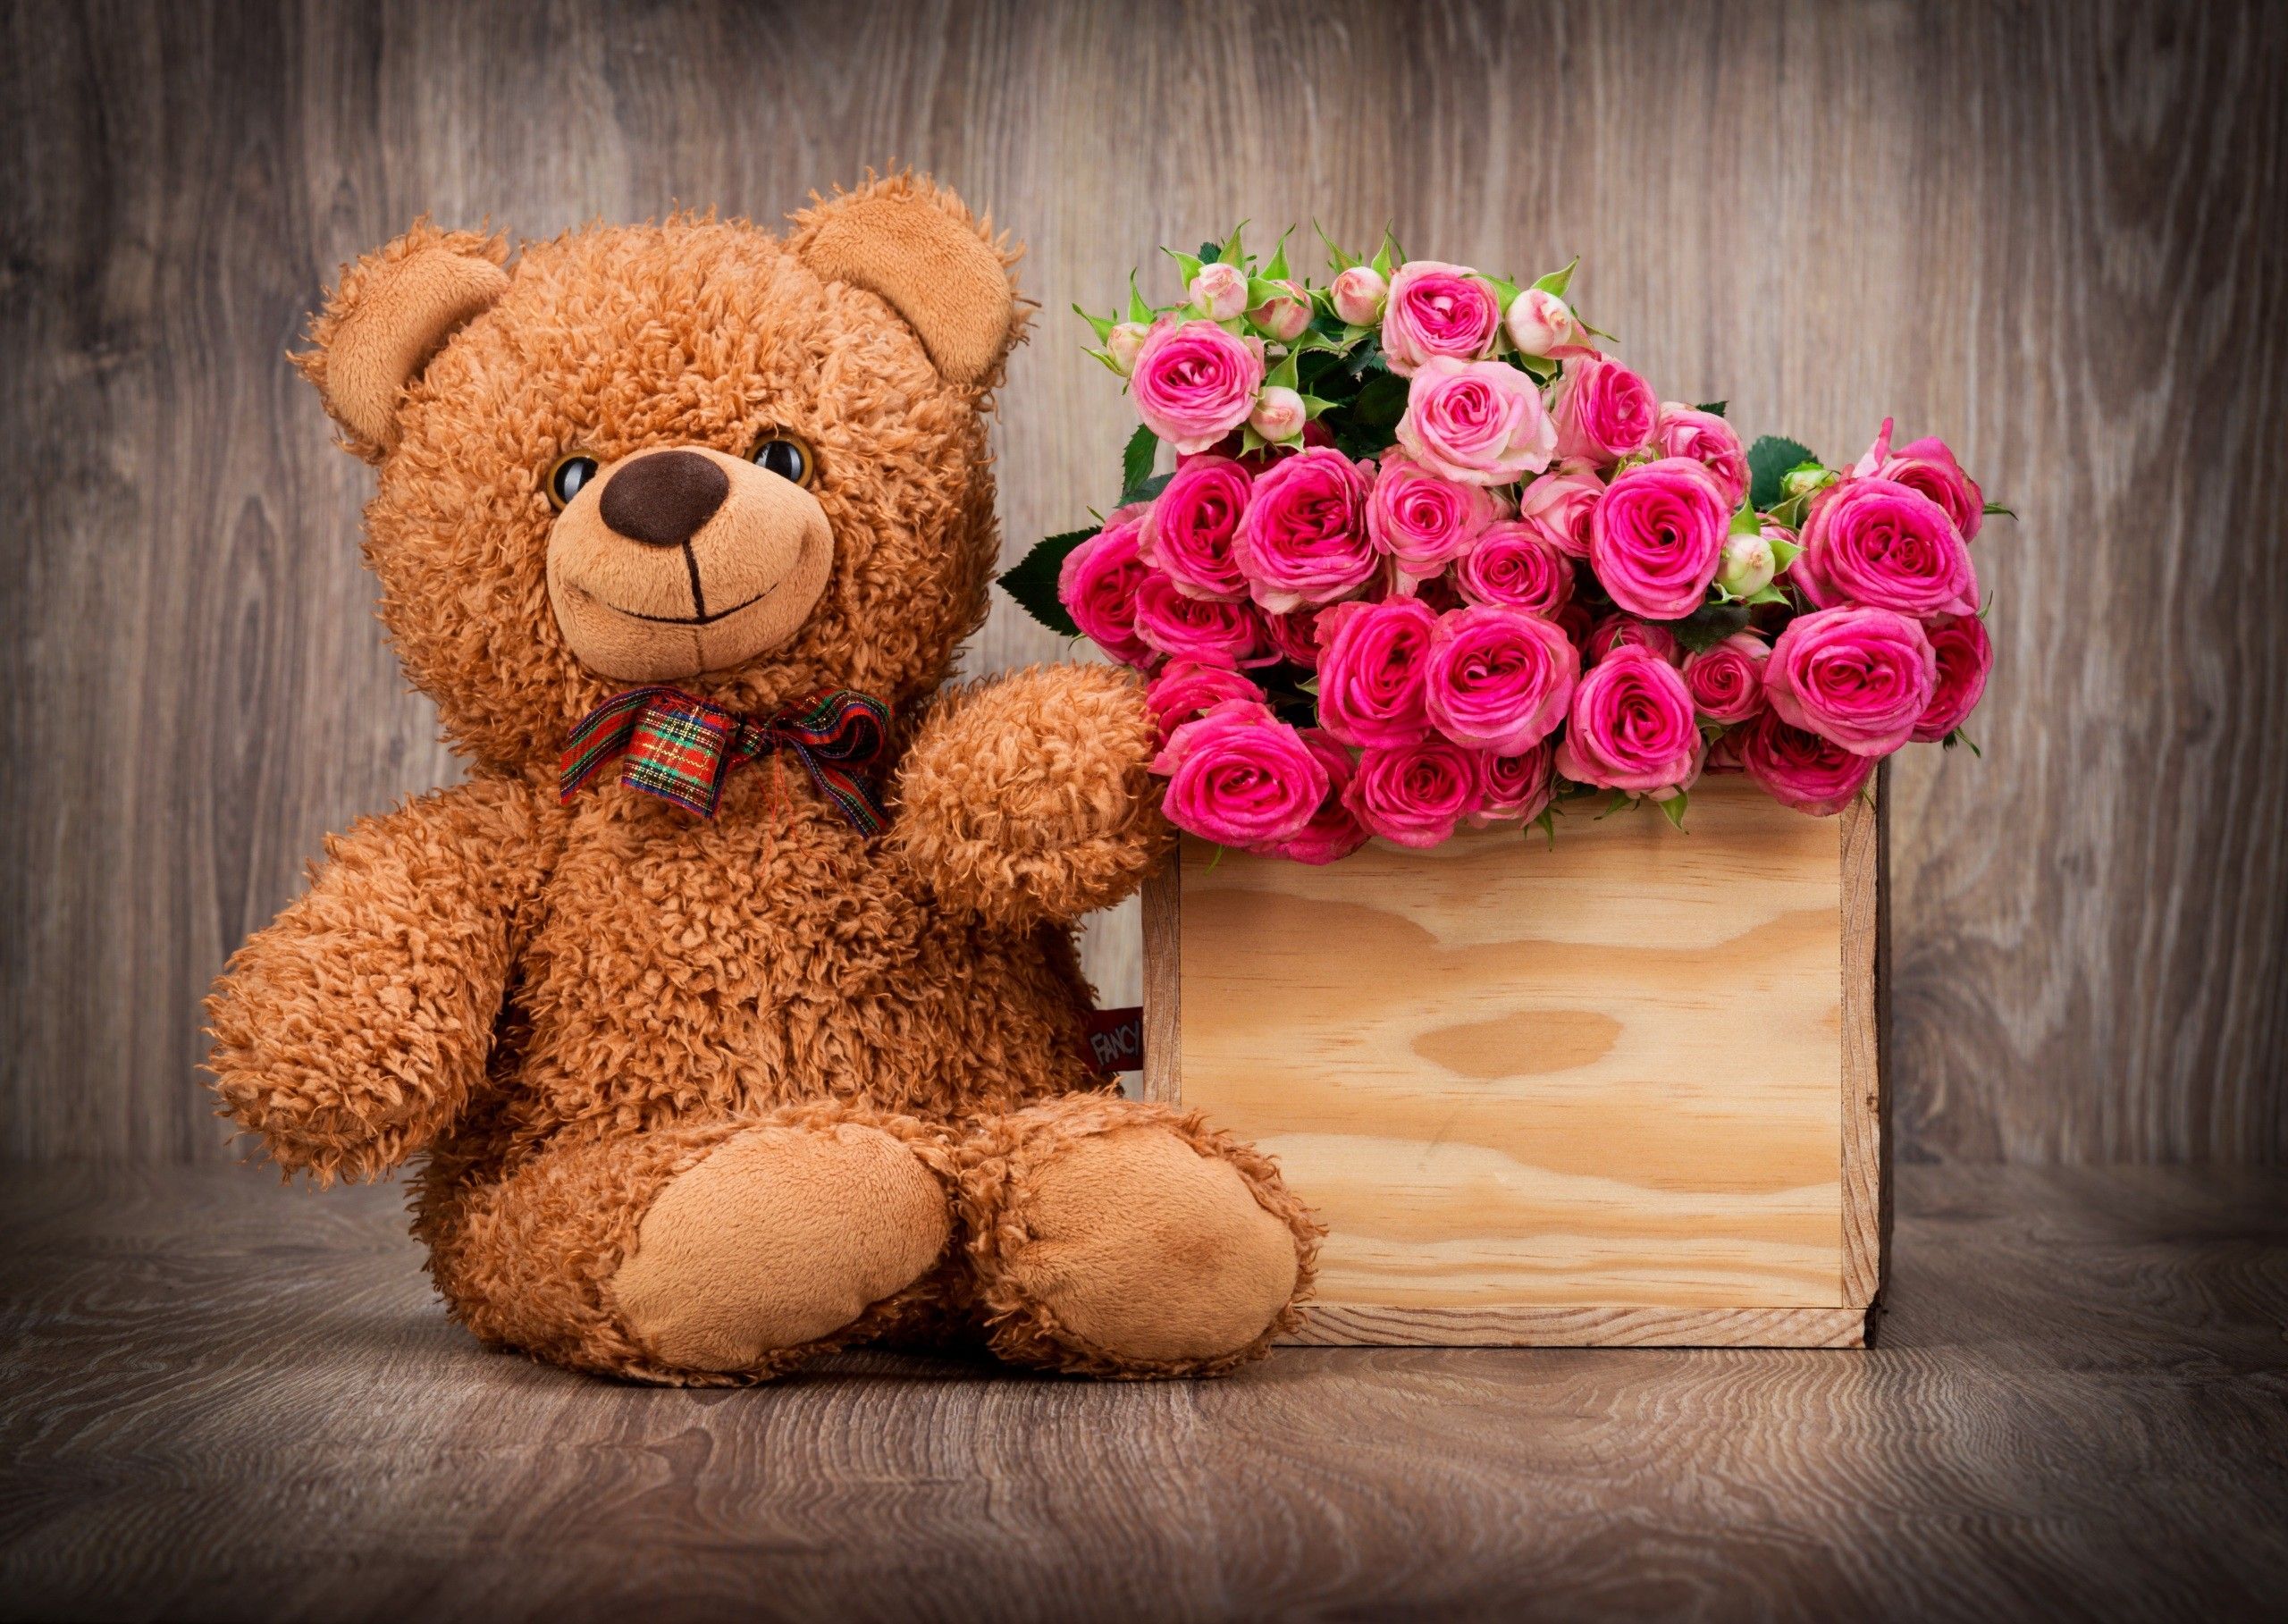 A teddy bear sitting next to some flowers - Teddy bear